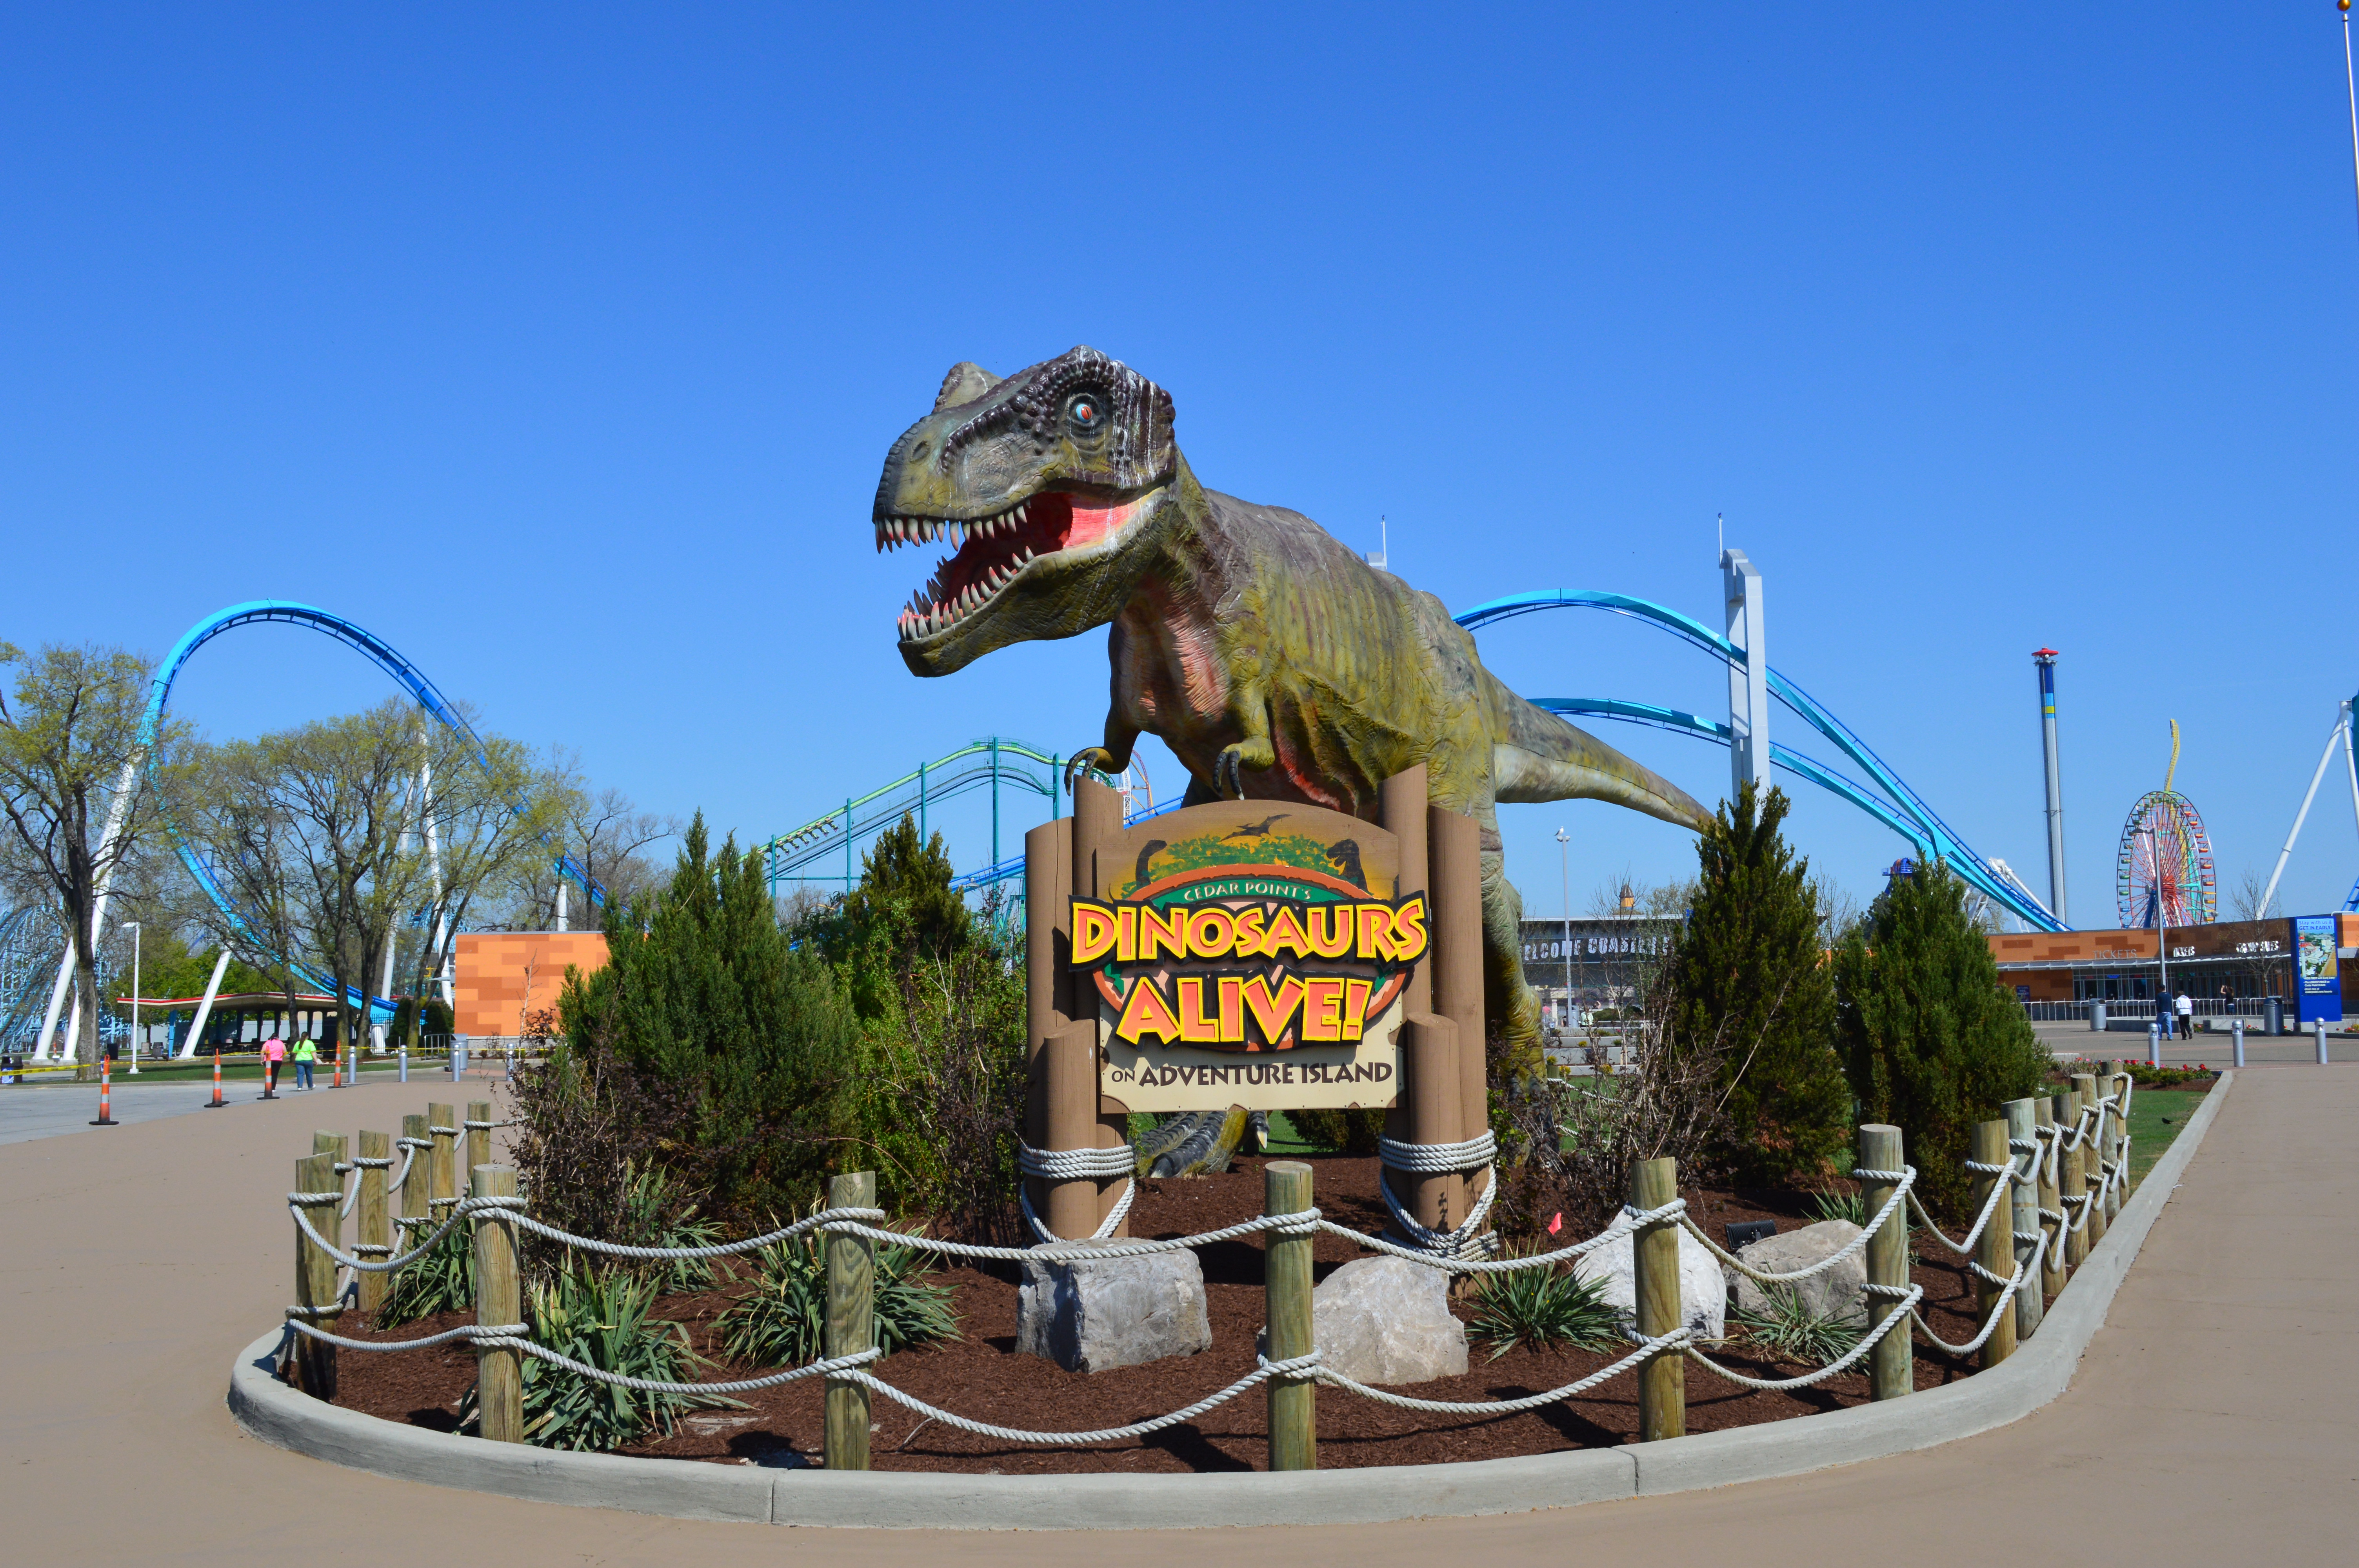 Dinosaurs Invade Ohio - Coaster101